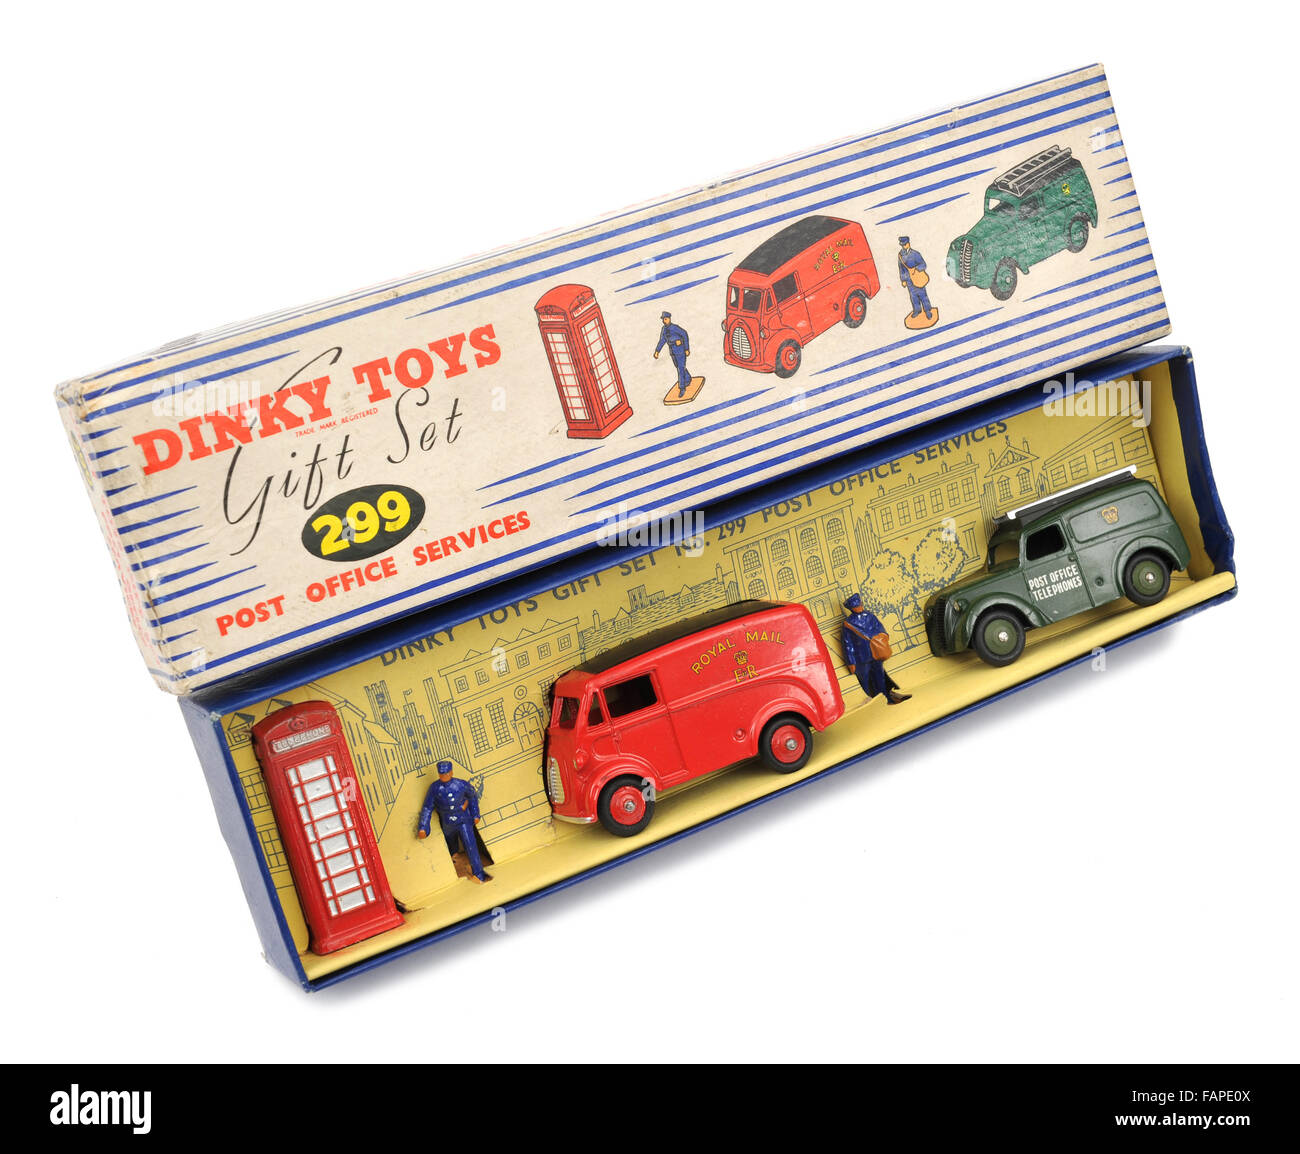 Bambini giocattoli Dinky 299 Post Office Services Set regalo Foto Stock